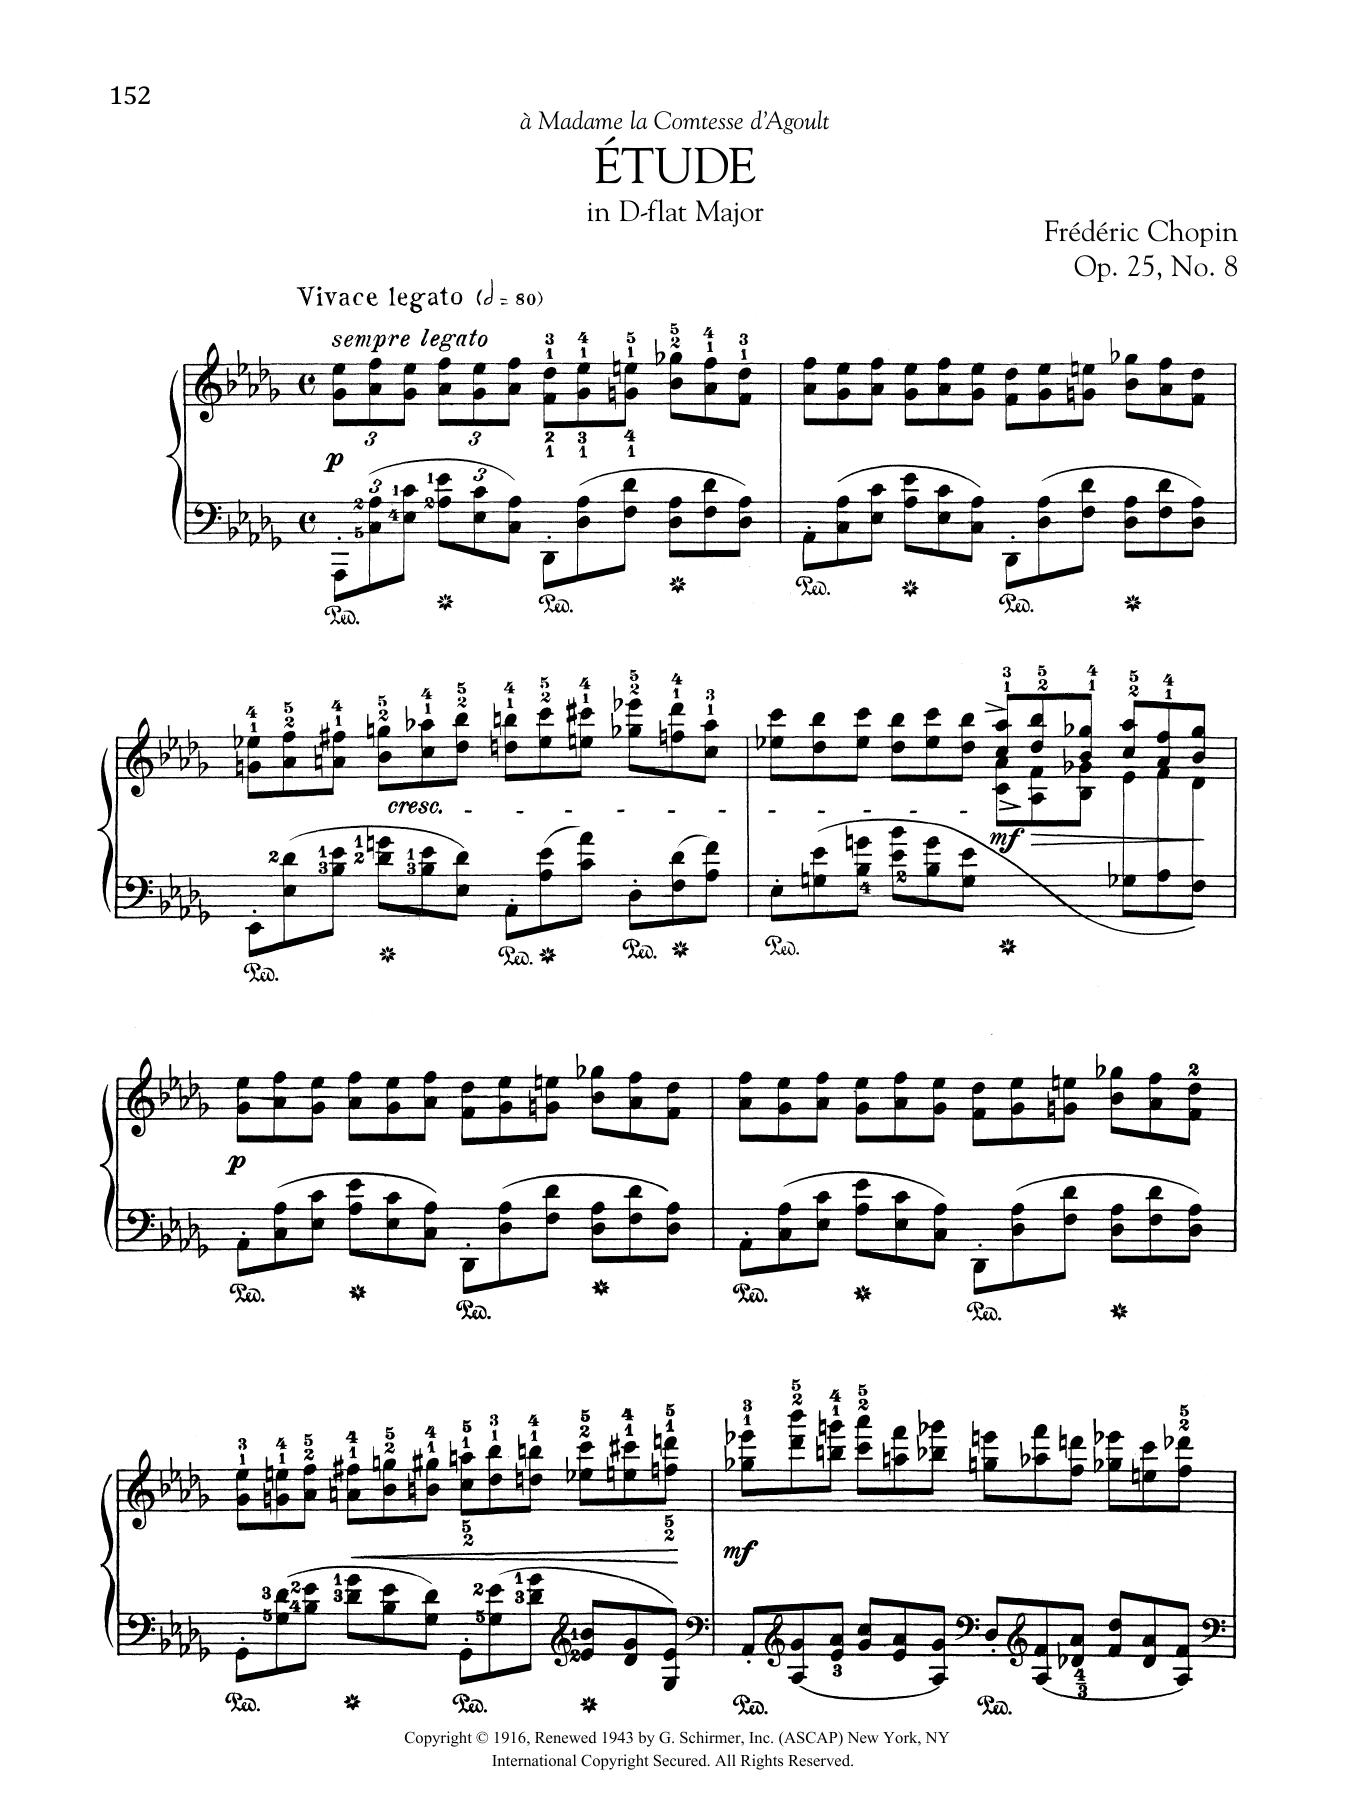 Download Frederic Chopin Etude in D-flat Major, Op. 25, No. 8 Sheet Music